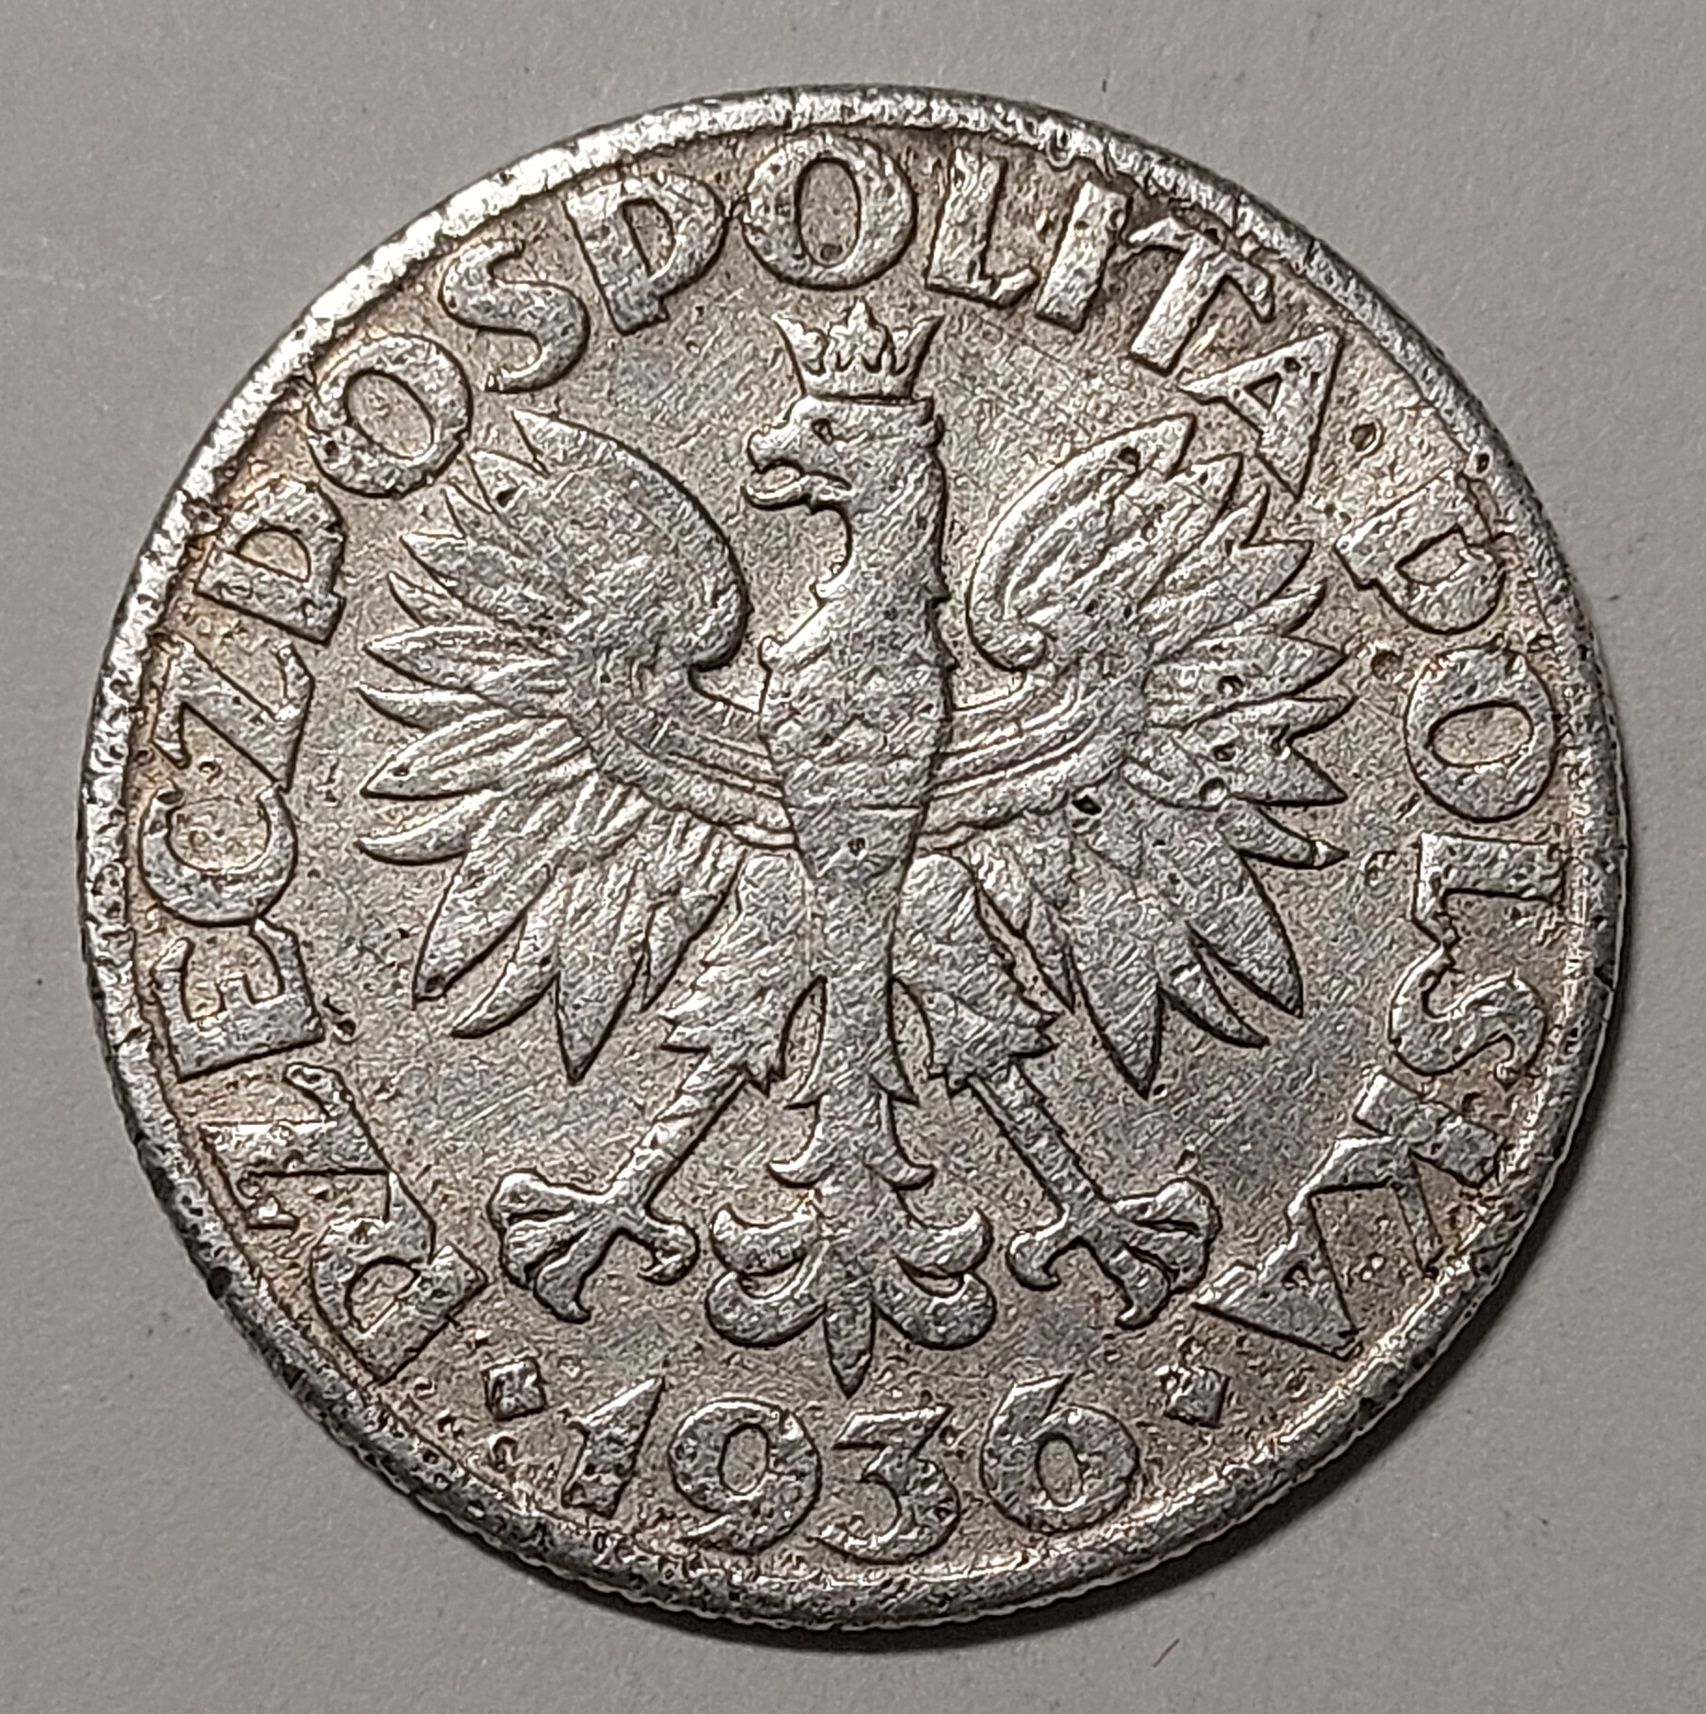 Srebrna moneta 2zł Statek / Żaglowiec 1936r